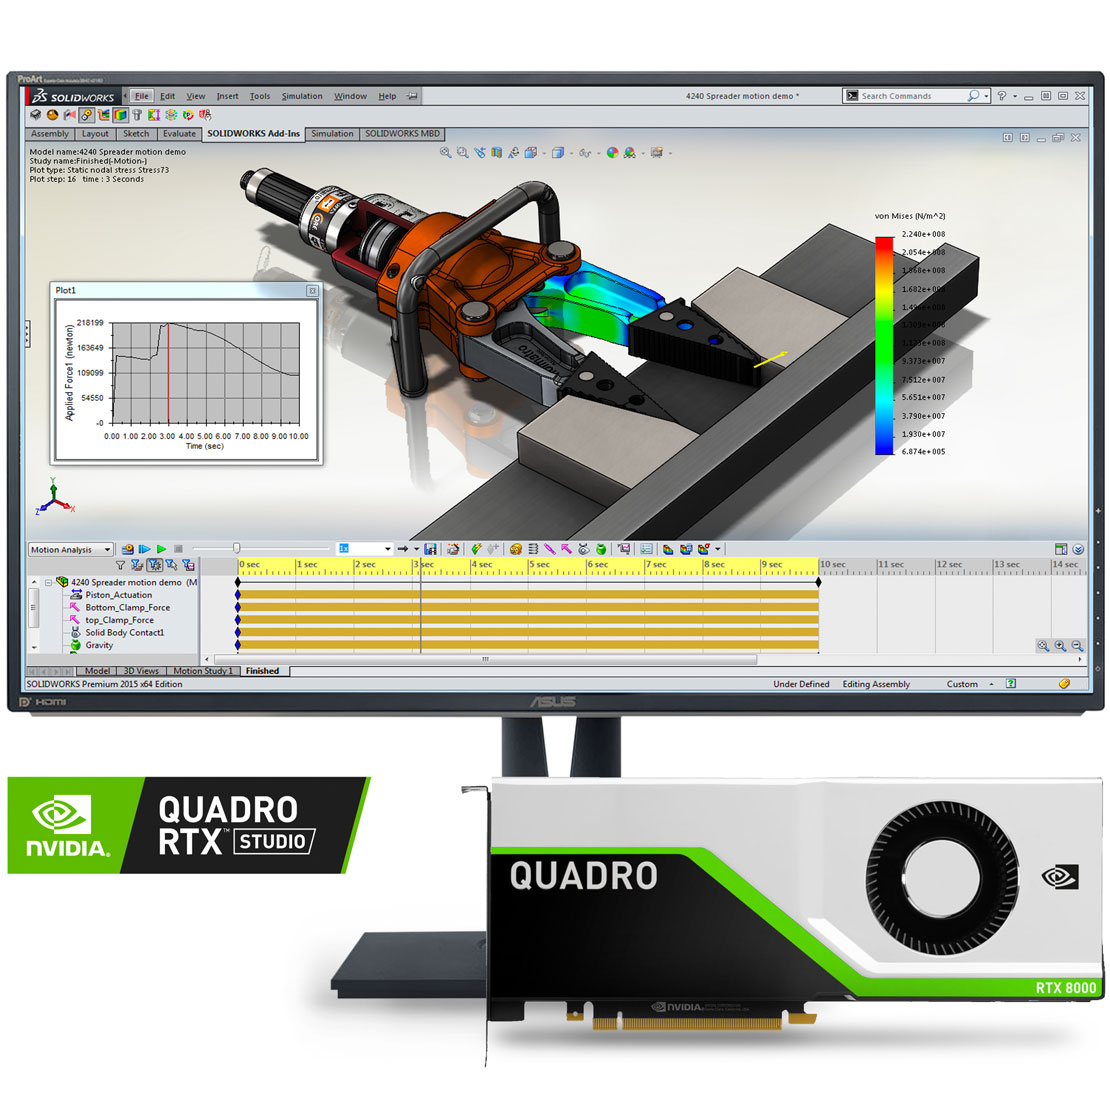 Engineering Software running with NVIDIA Quadro Studio